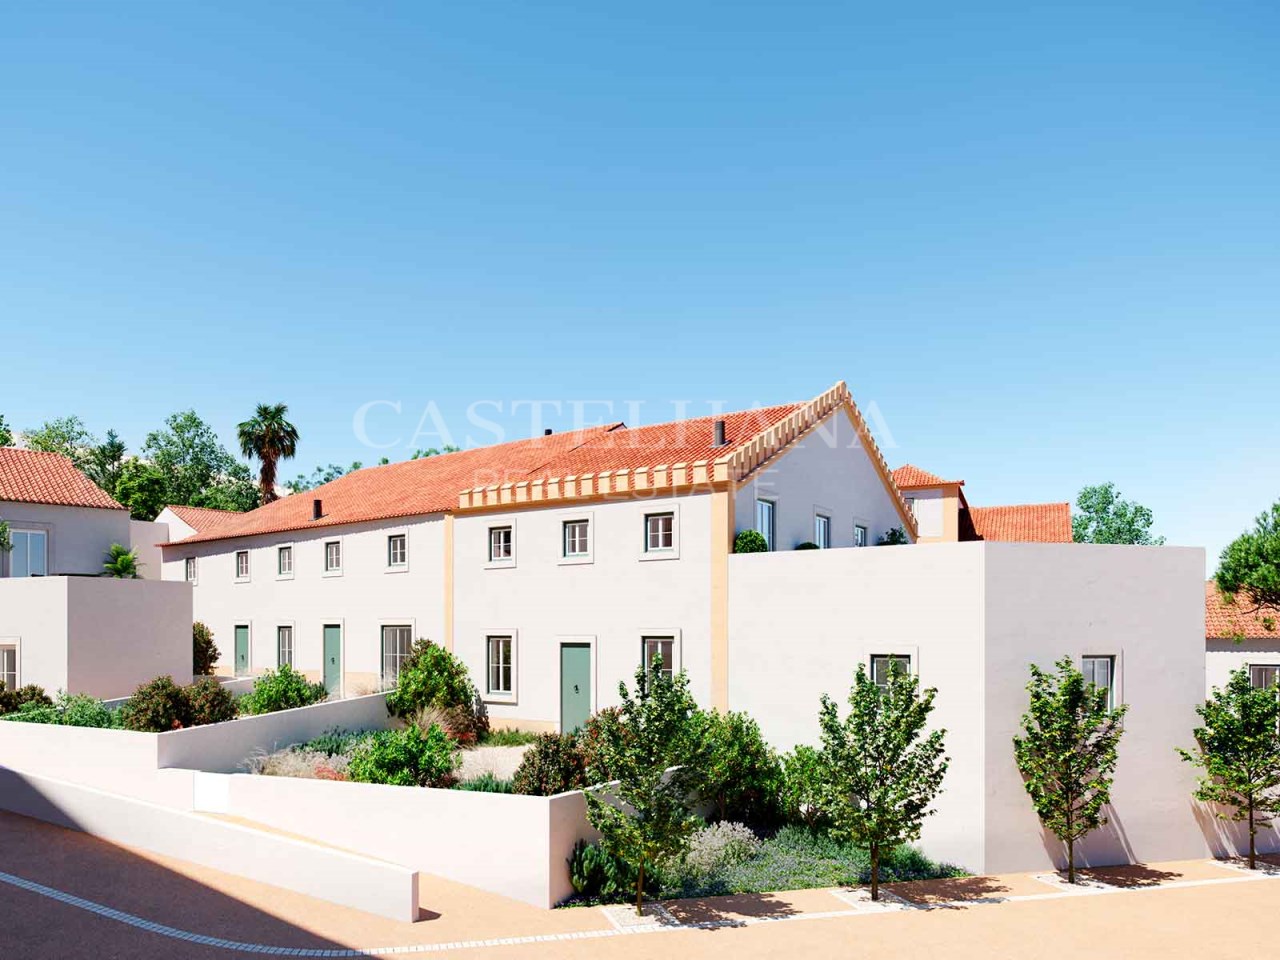 1 bedroom villa with garden and parking in new development, Lisbon